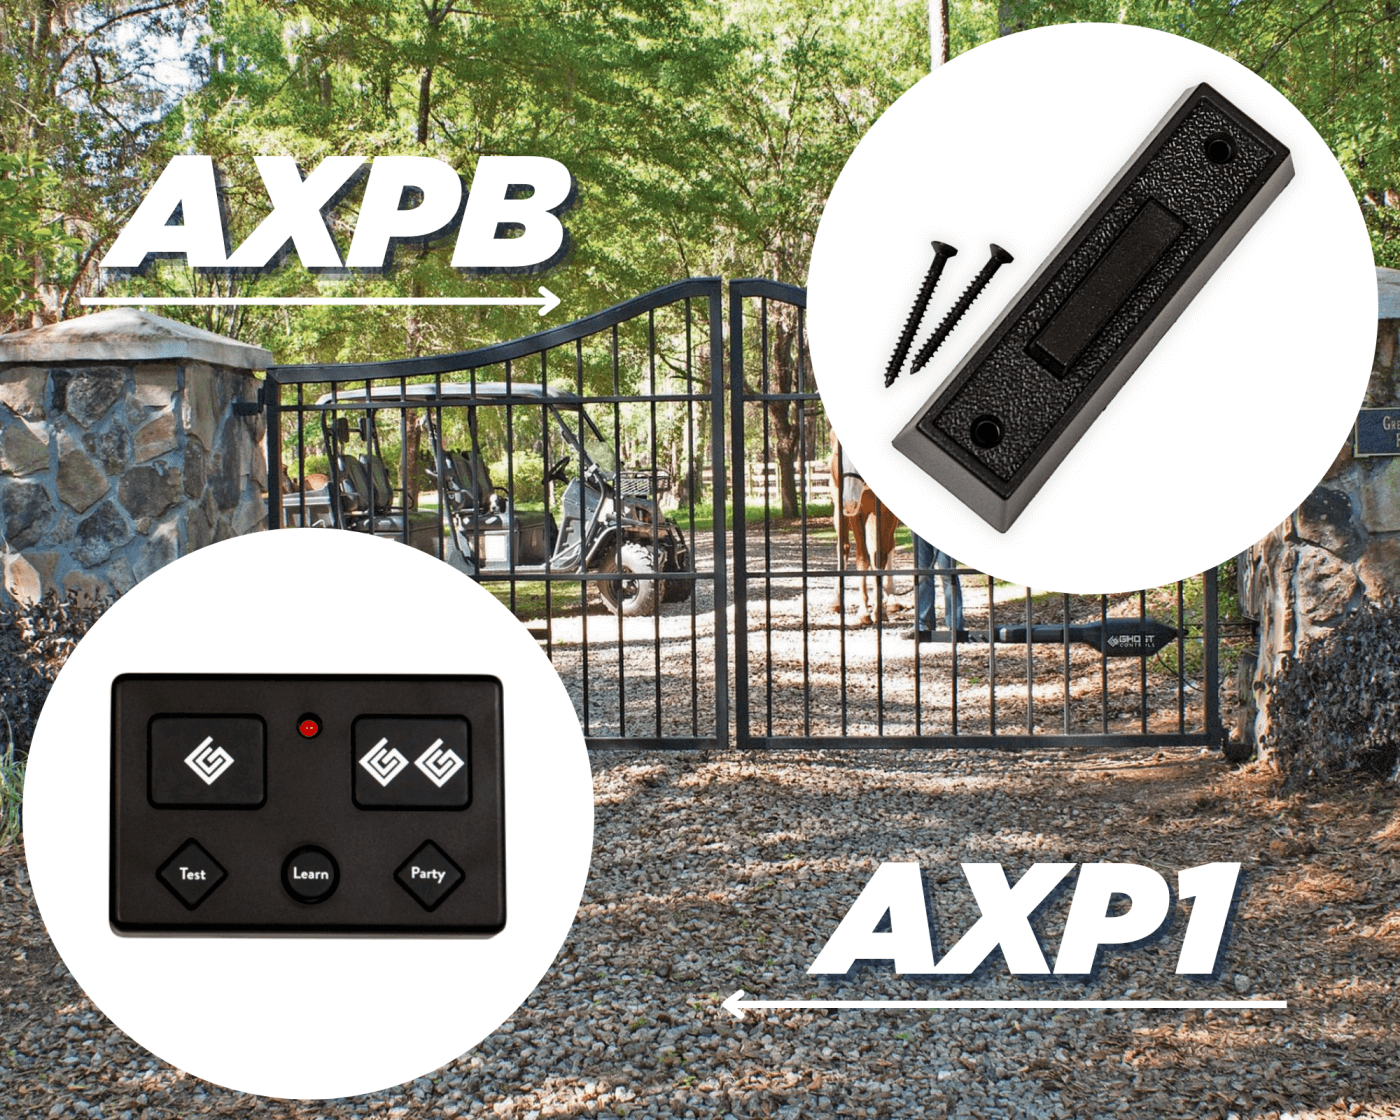 Using An AXPB Push Button With An AXP1 Premium Remote